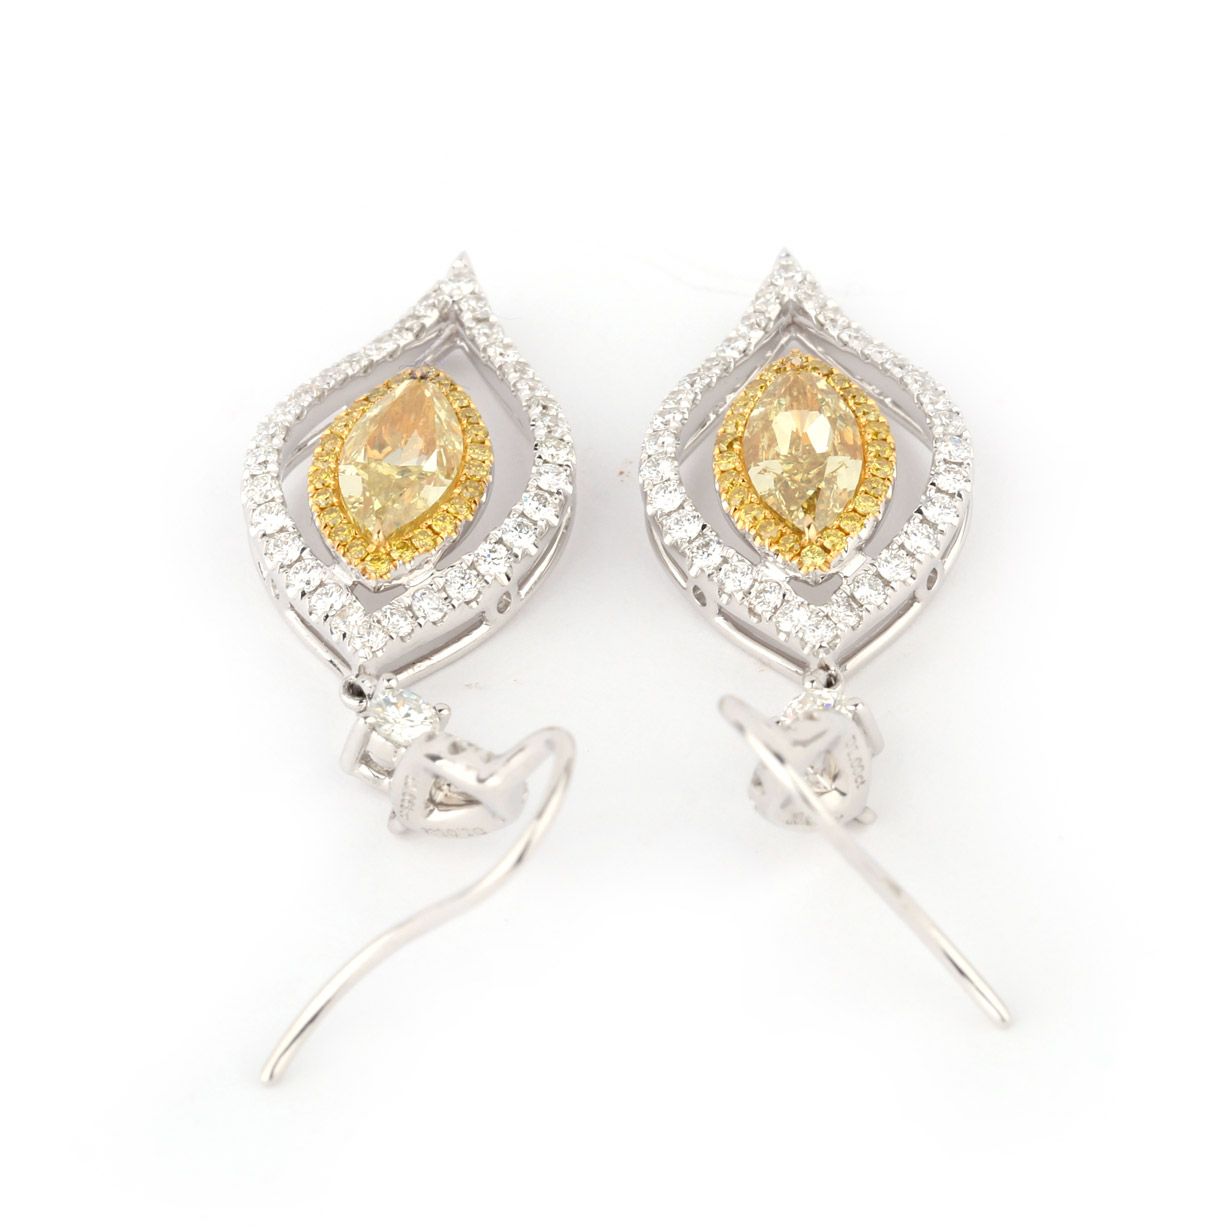 Fancy Brown-Greenish Yellow Diamond Earrings, 3.35 Ct. TW, Marquise shape